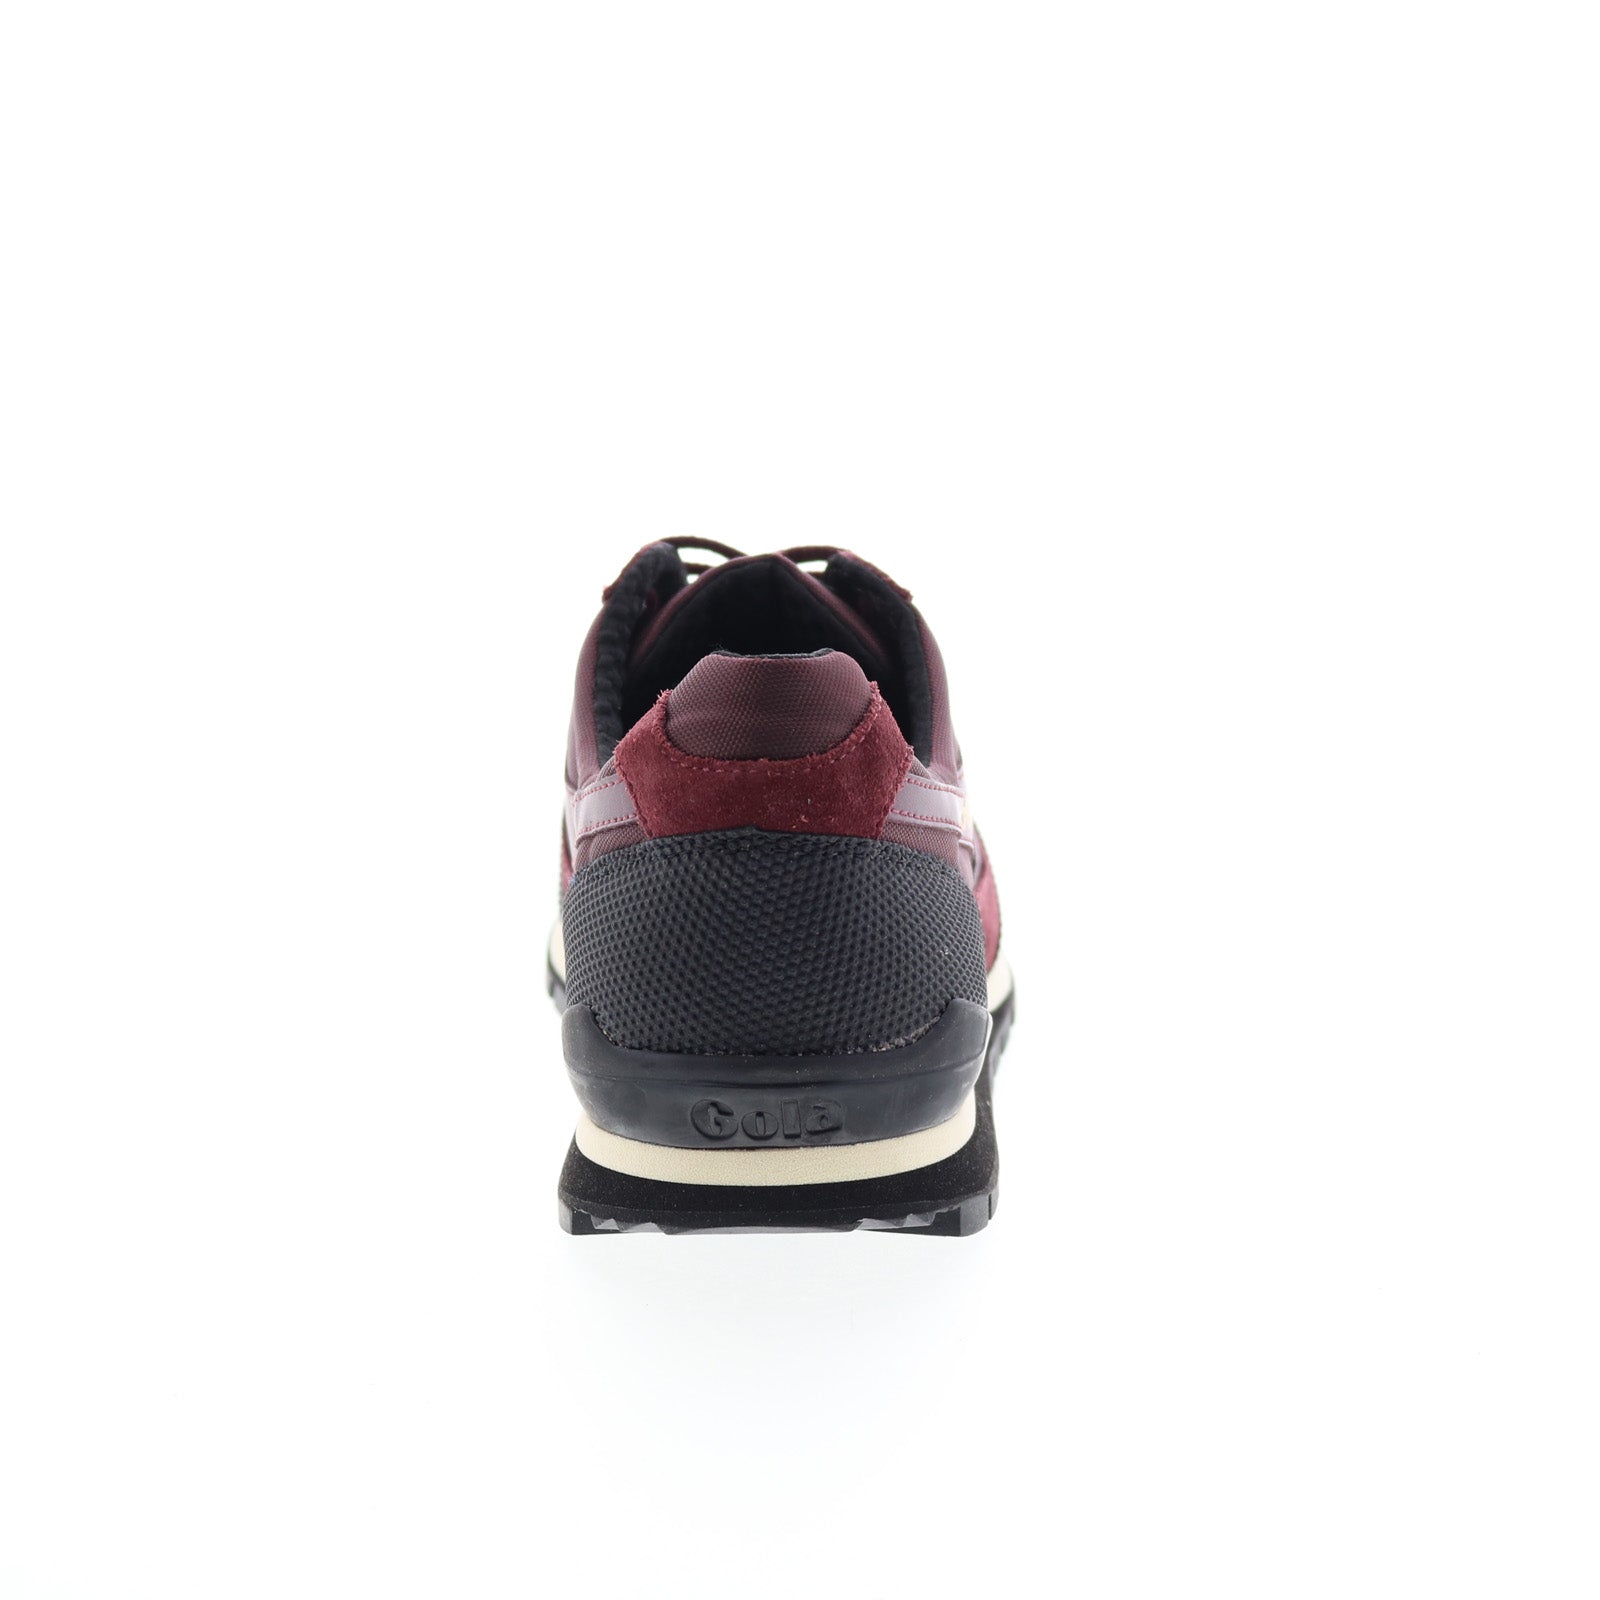 Gola Ridgerunner Ii CMA147 Mens Burgundy Canvas Lifestyle Sneakers Shoes